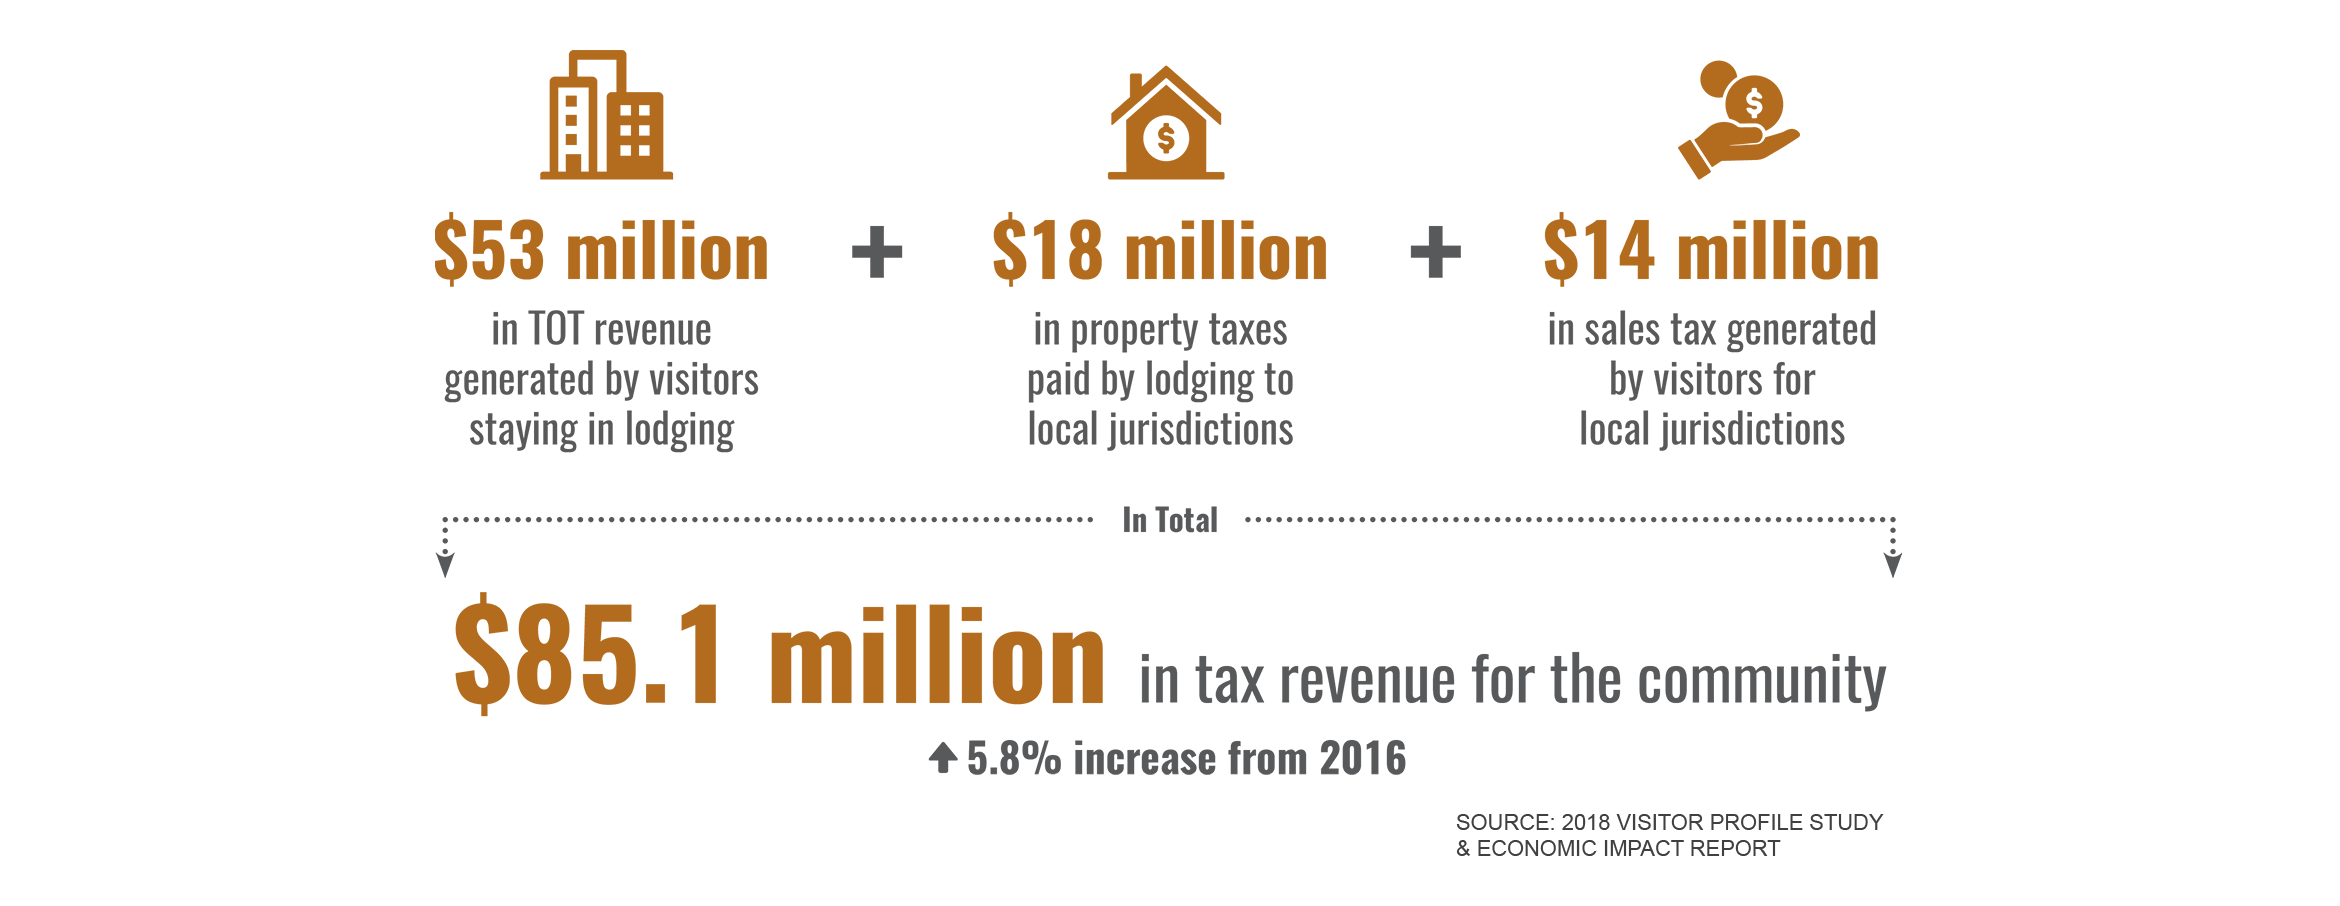 NV Community Revenue infographic